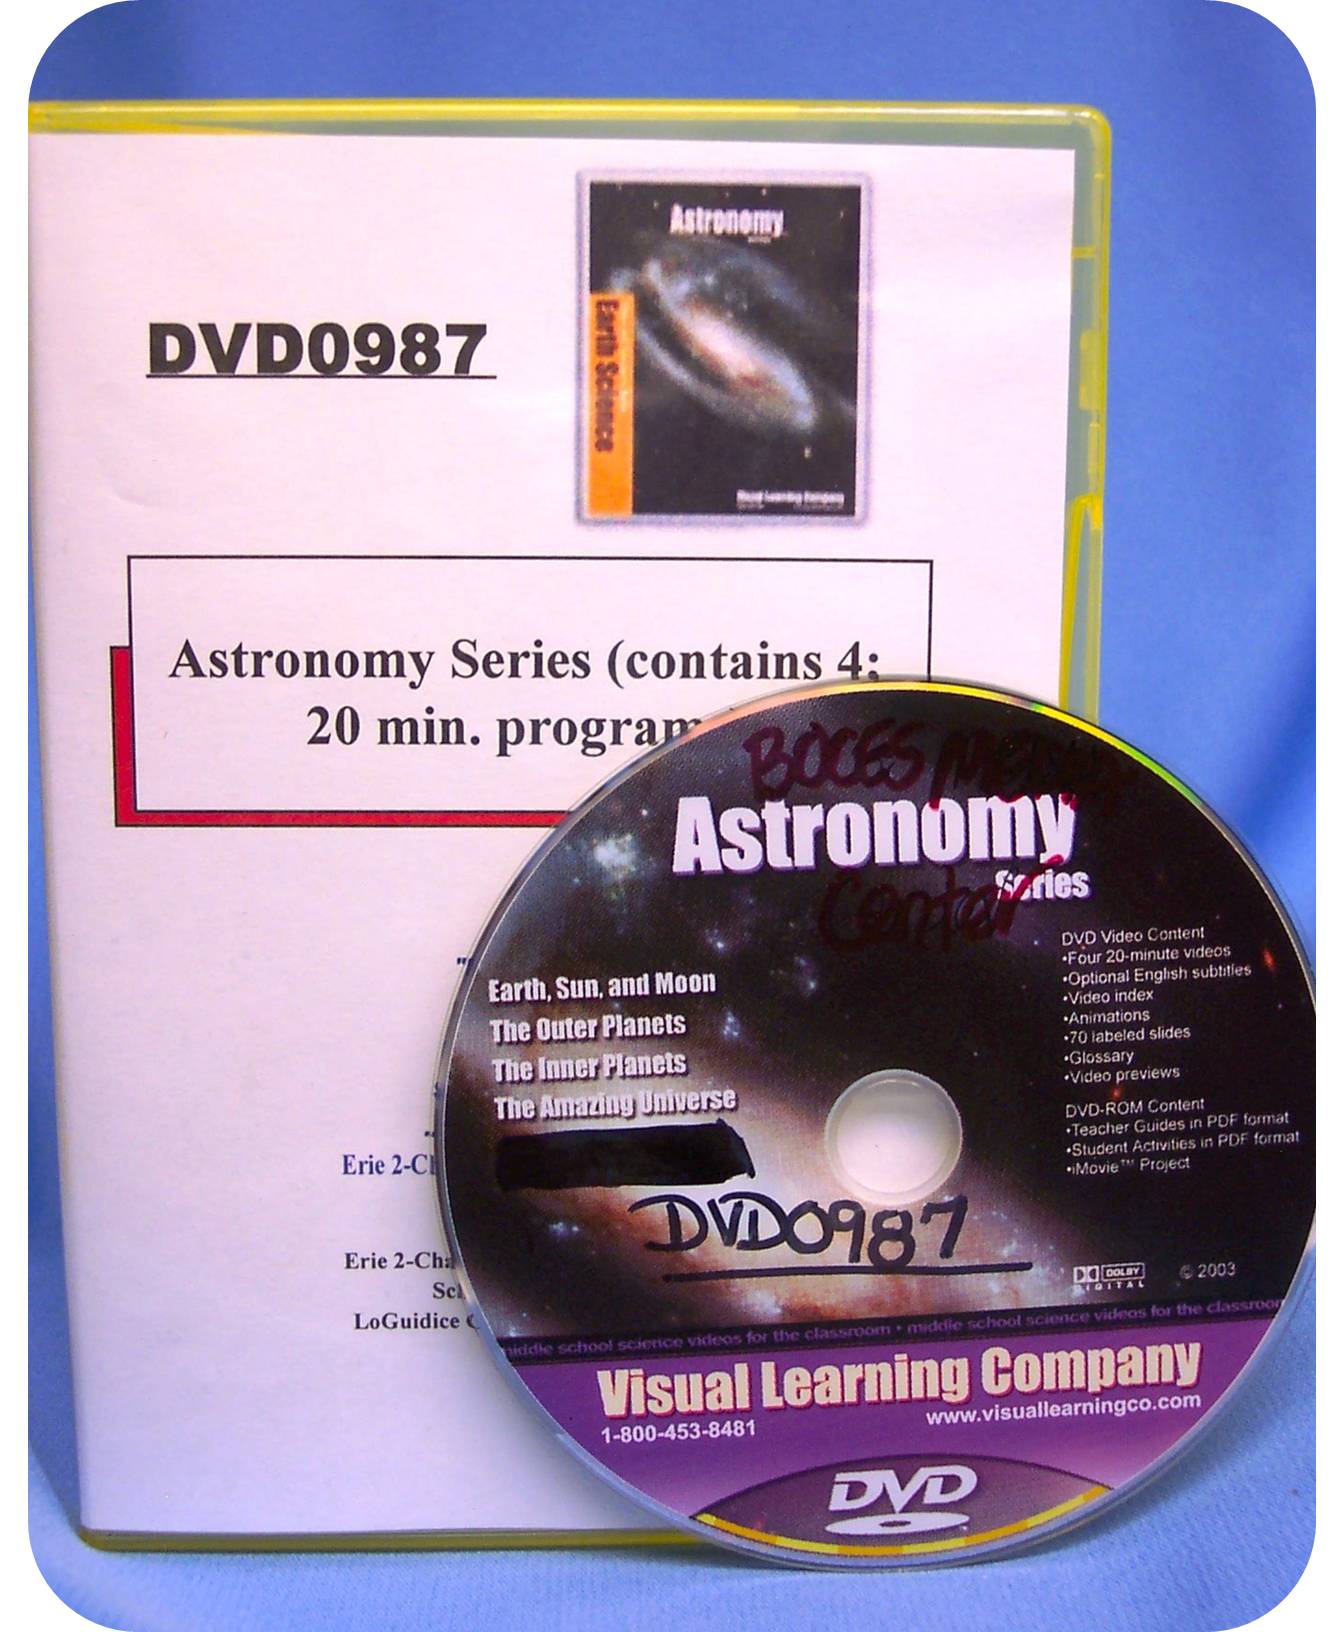 Astronomy Series (contains 4; 20 min. programs)